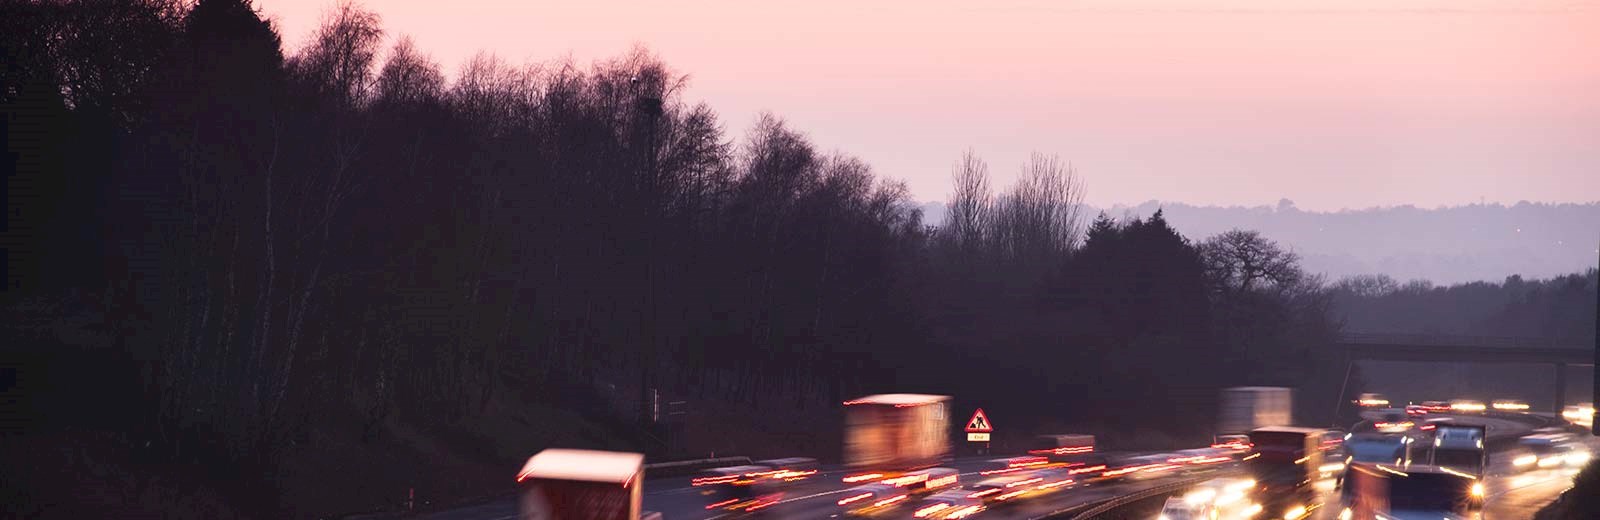 Night View of UK Motorway Highways - Mace Group